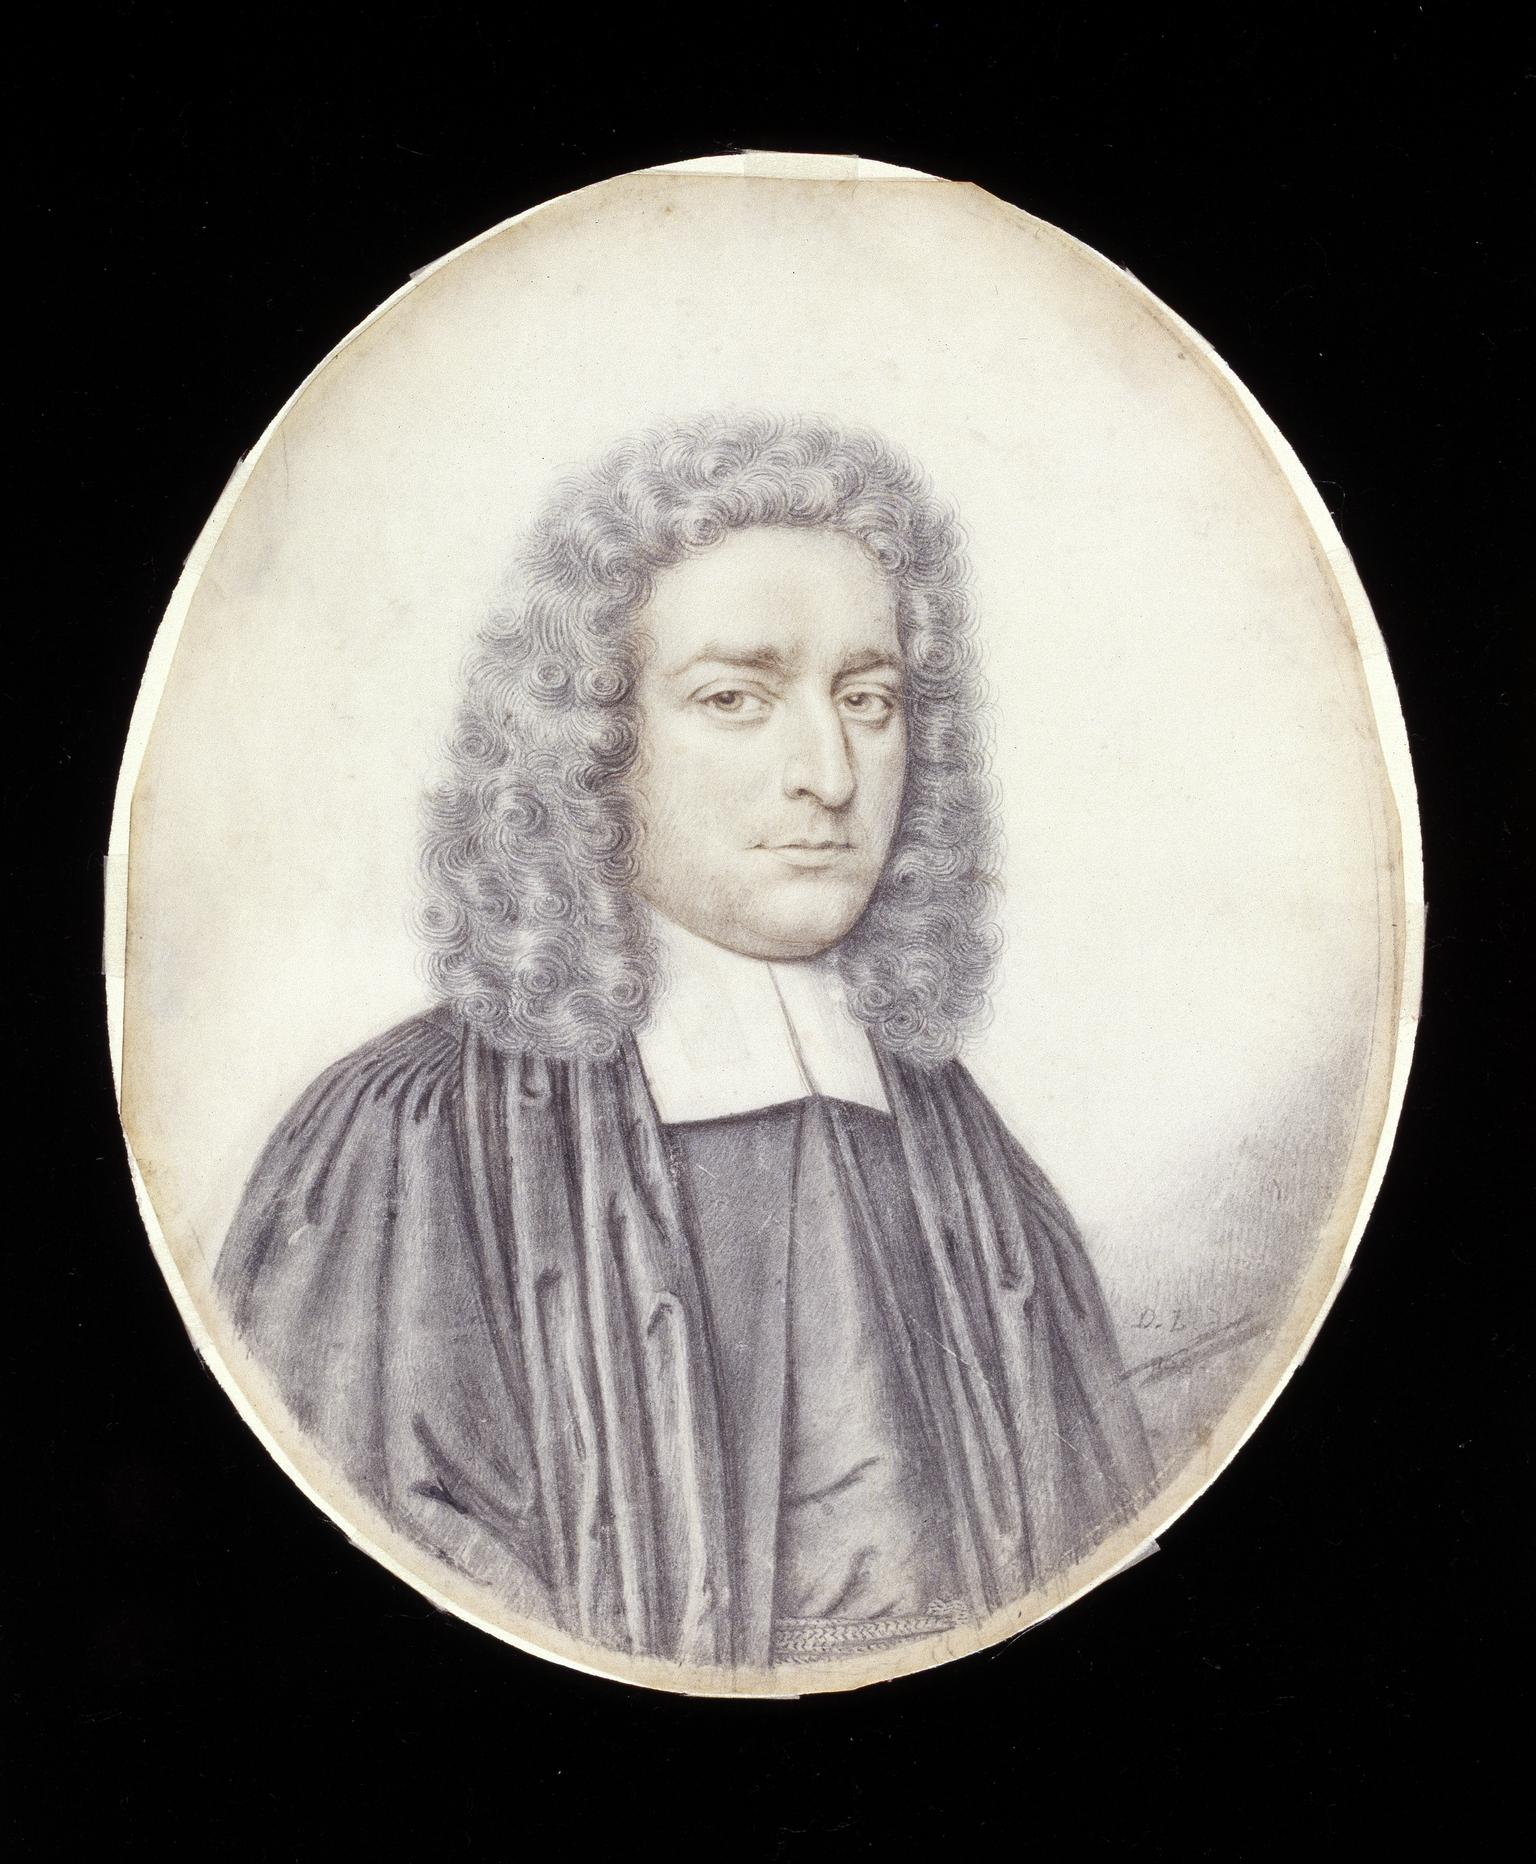 Daniel Pryce (d. 1706)